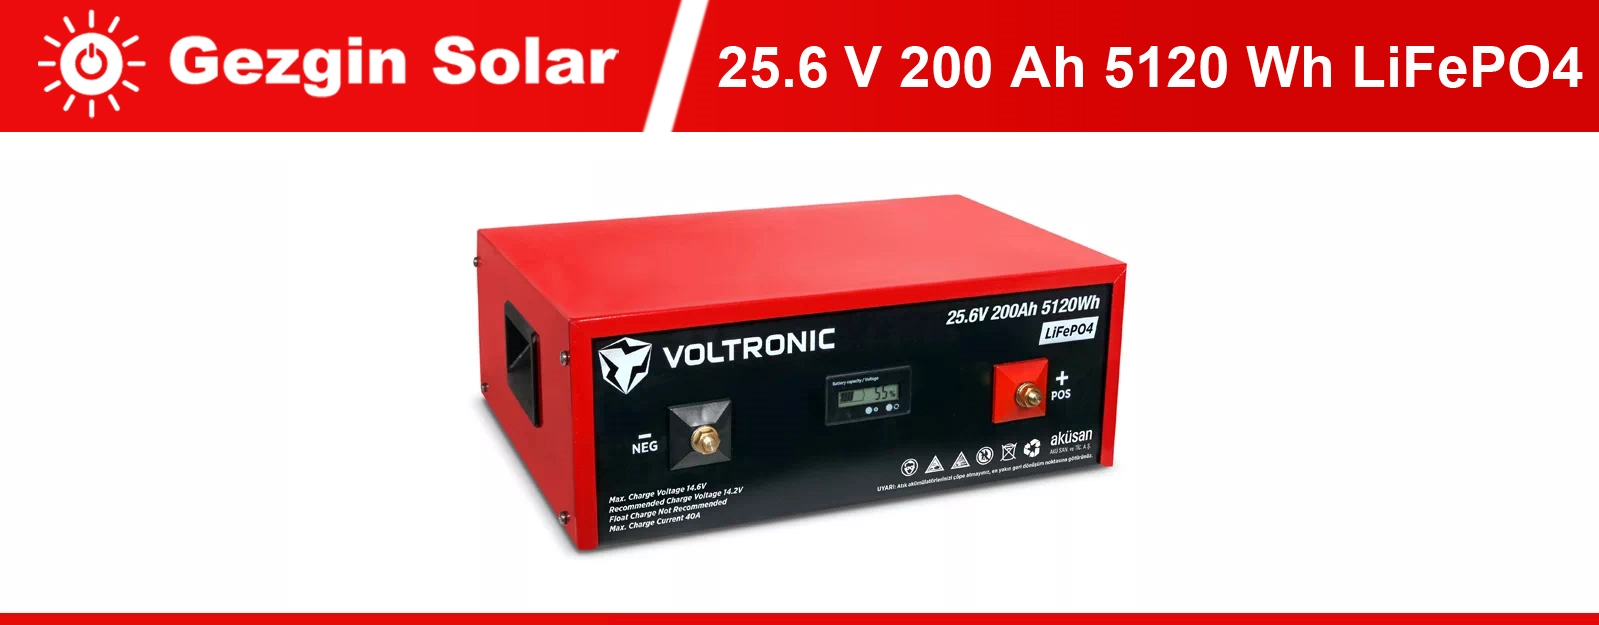 Gezgin Solar Voltronic Akü 25.6 V 200 Ah LiFePO4